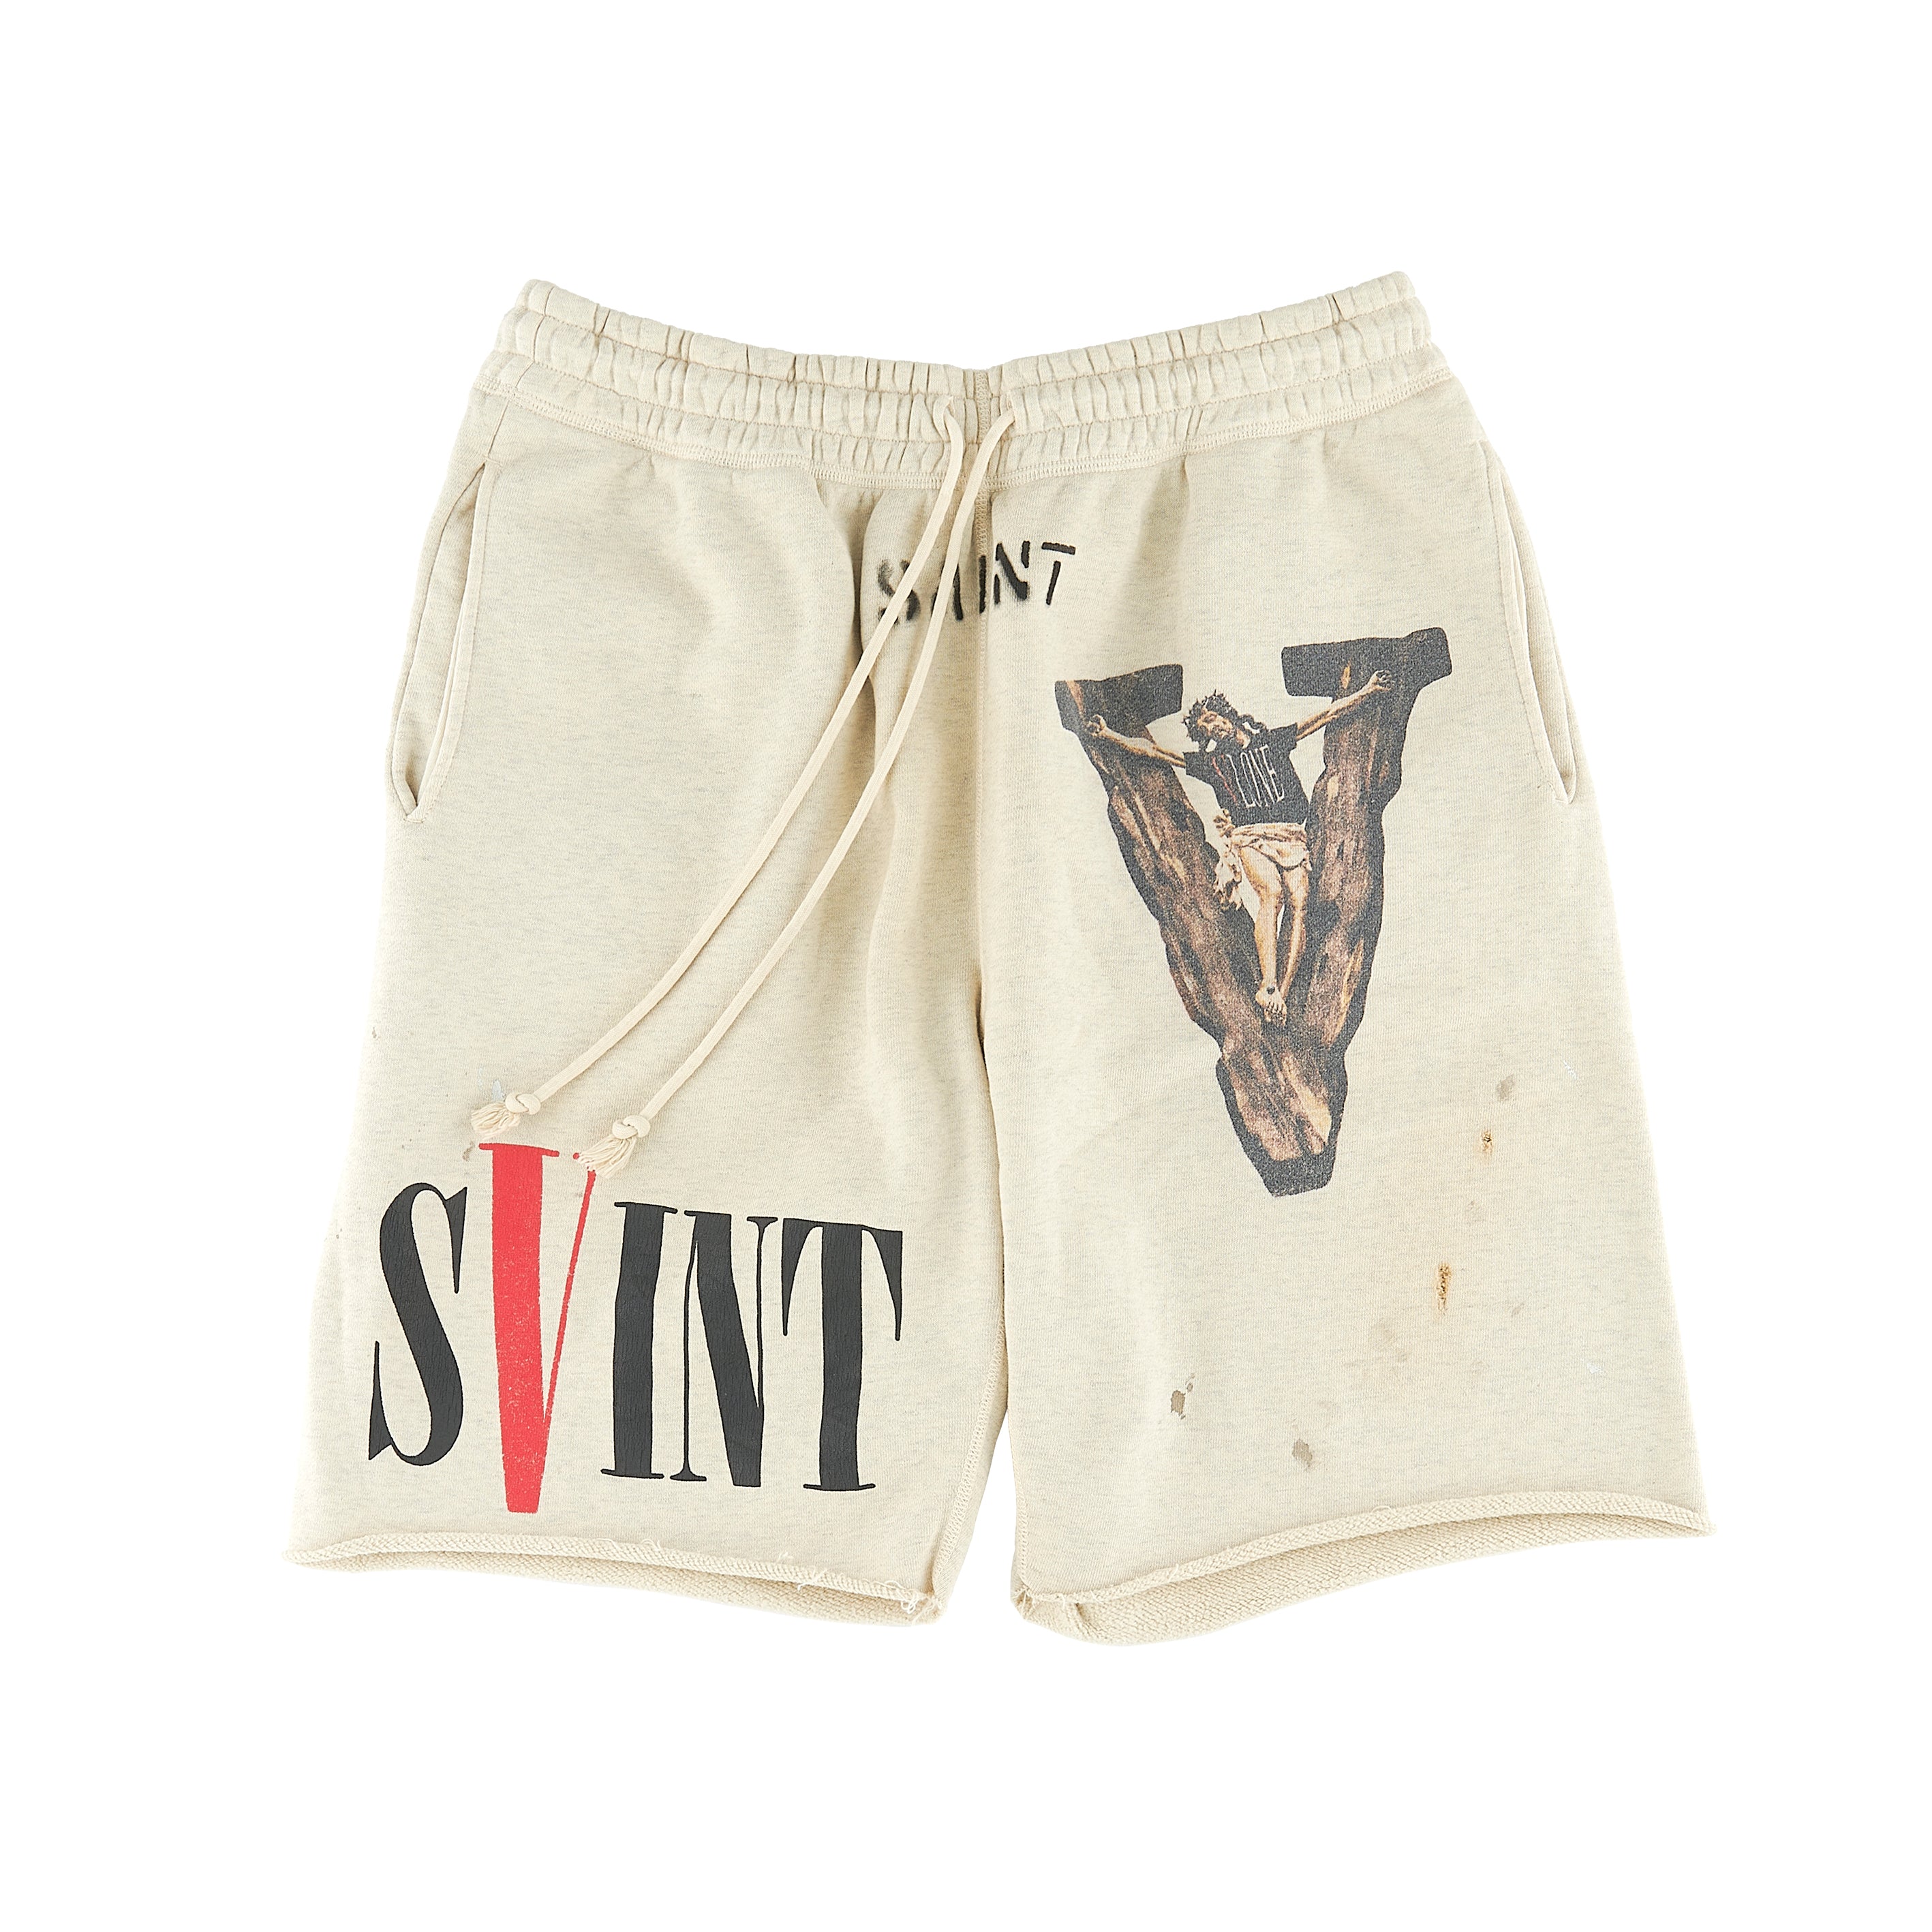 Saint Michael x VLone Sweat Shorts